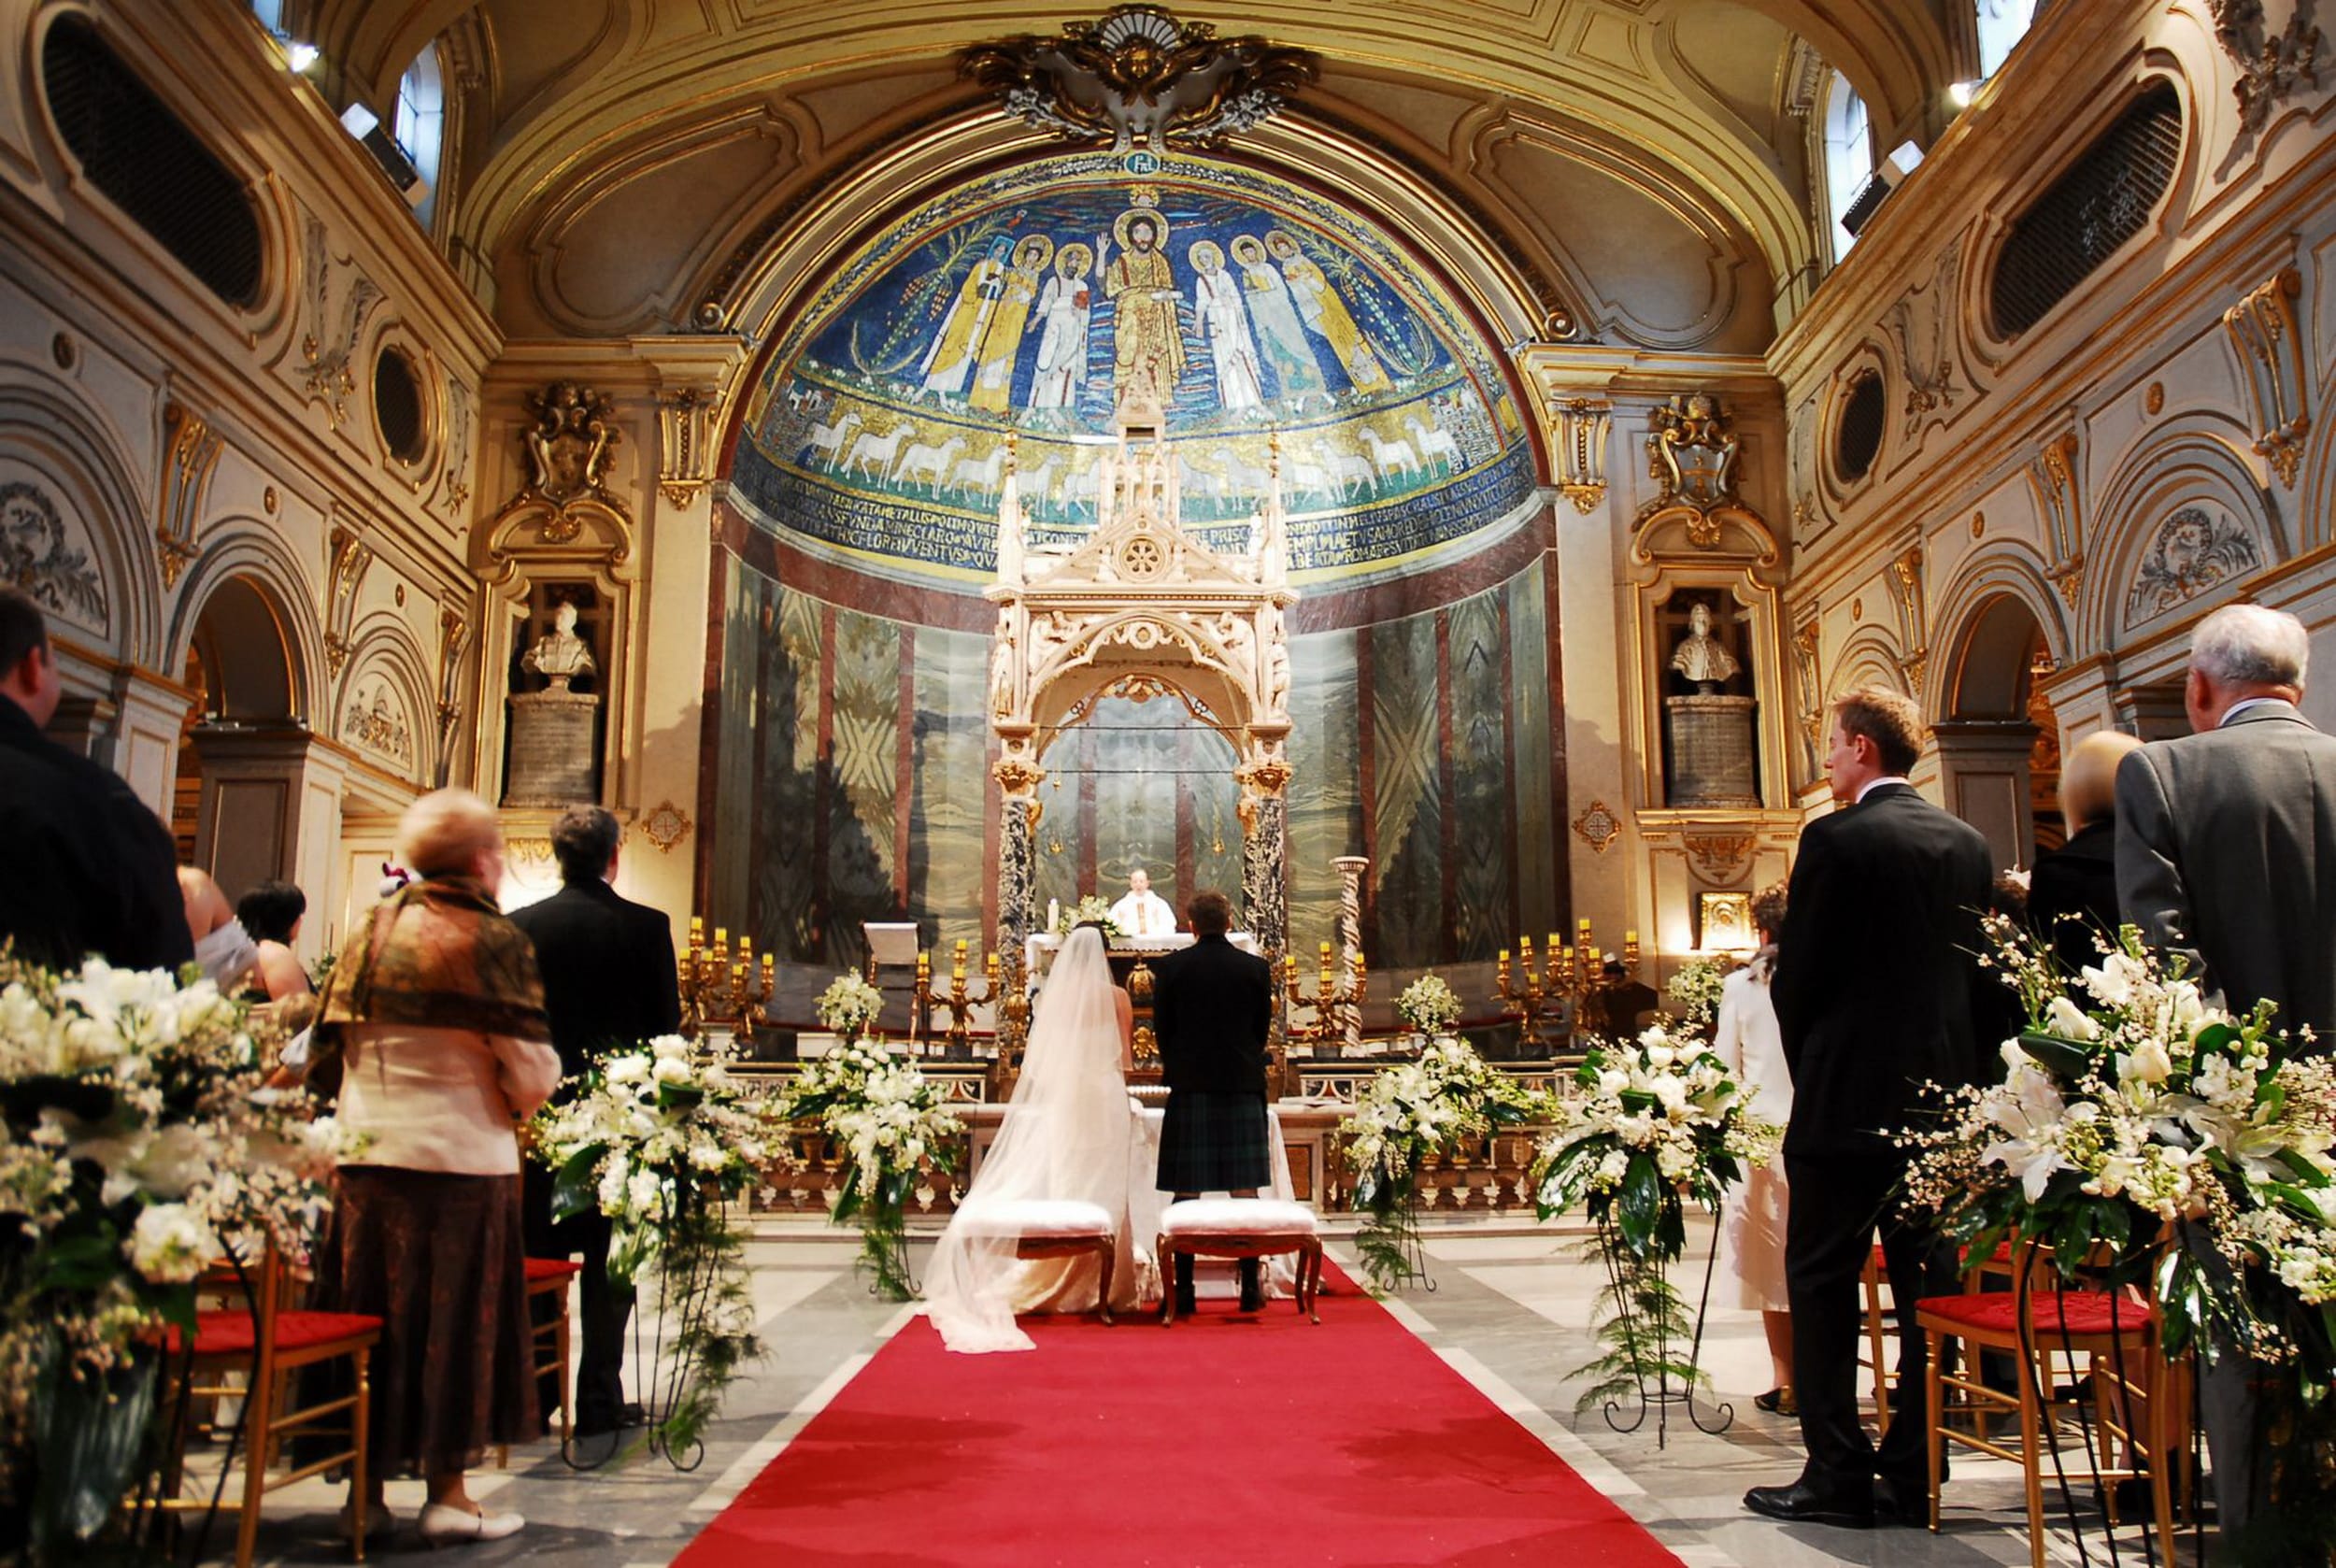 Церемония в церкви. Венчание в Италии в католической церкви. Венчание в церкви Италии в православной. Церемония бракосочетания в храме Италия. Венчание в Италии в христианской церкви.